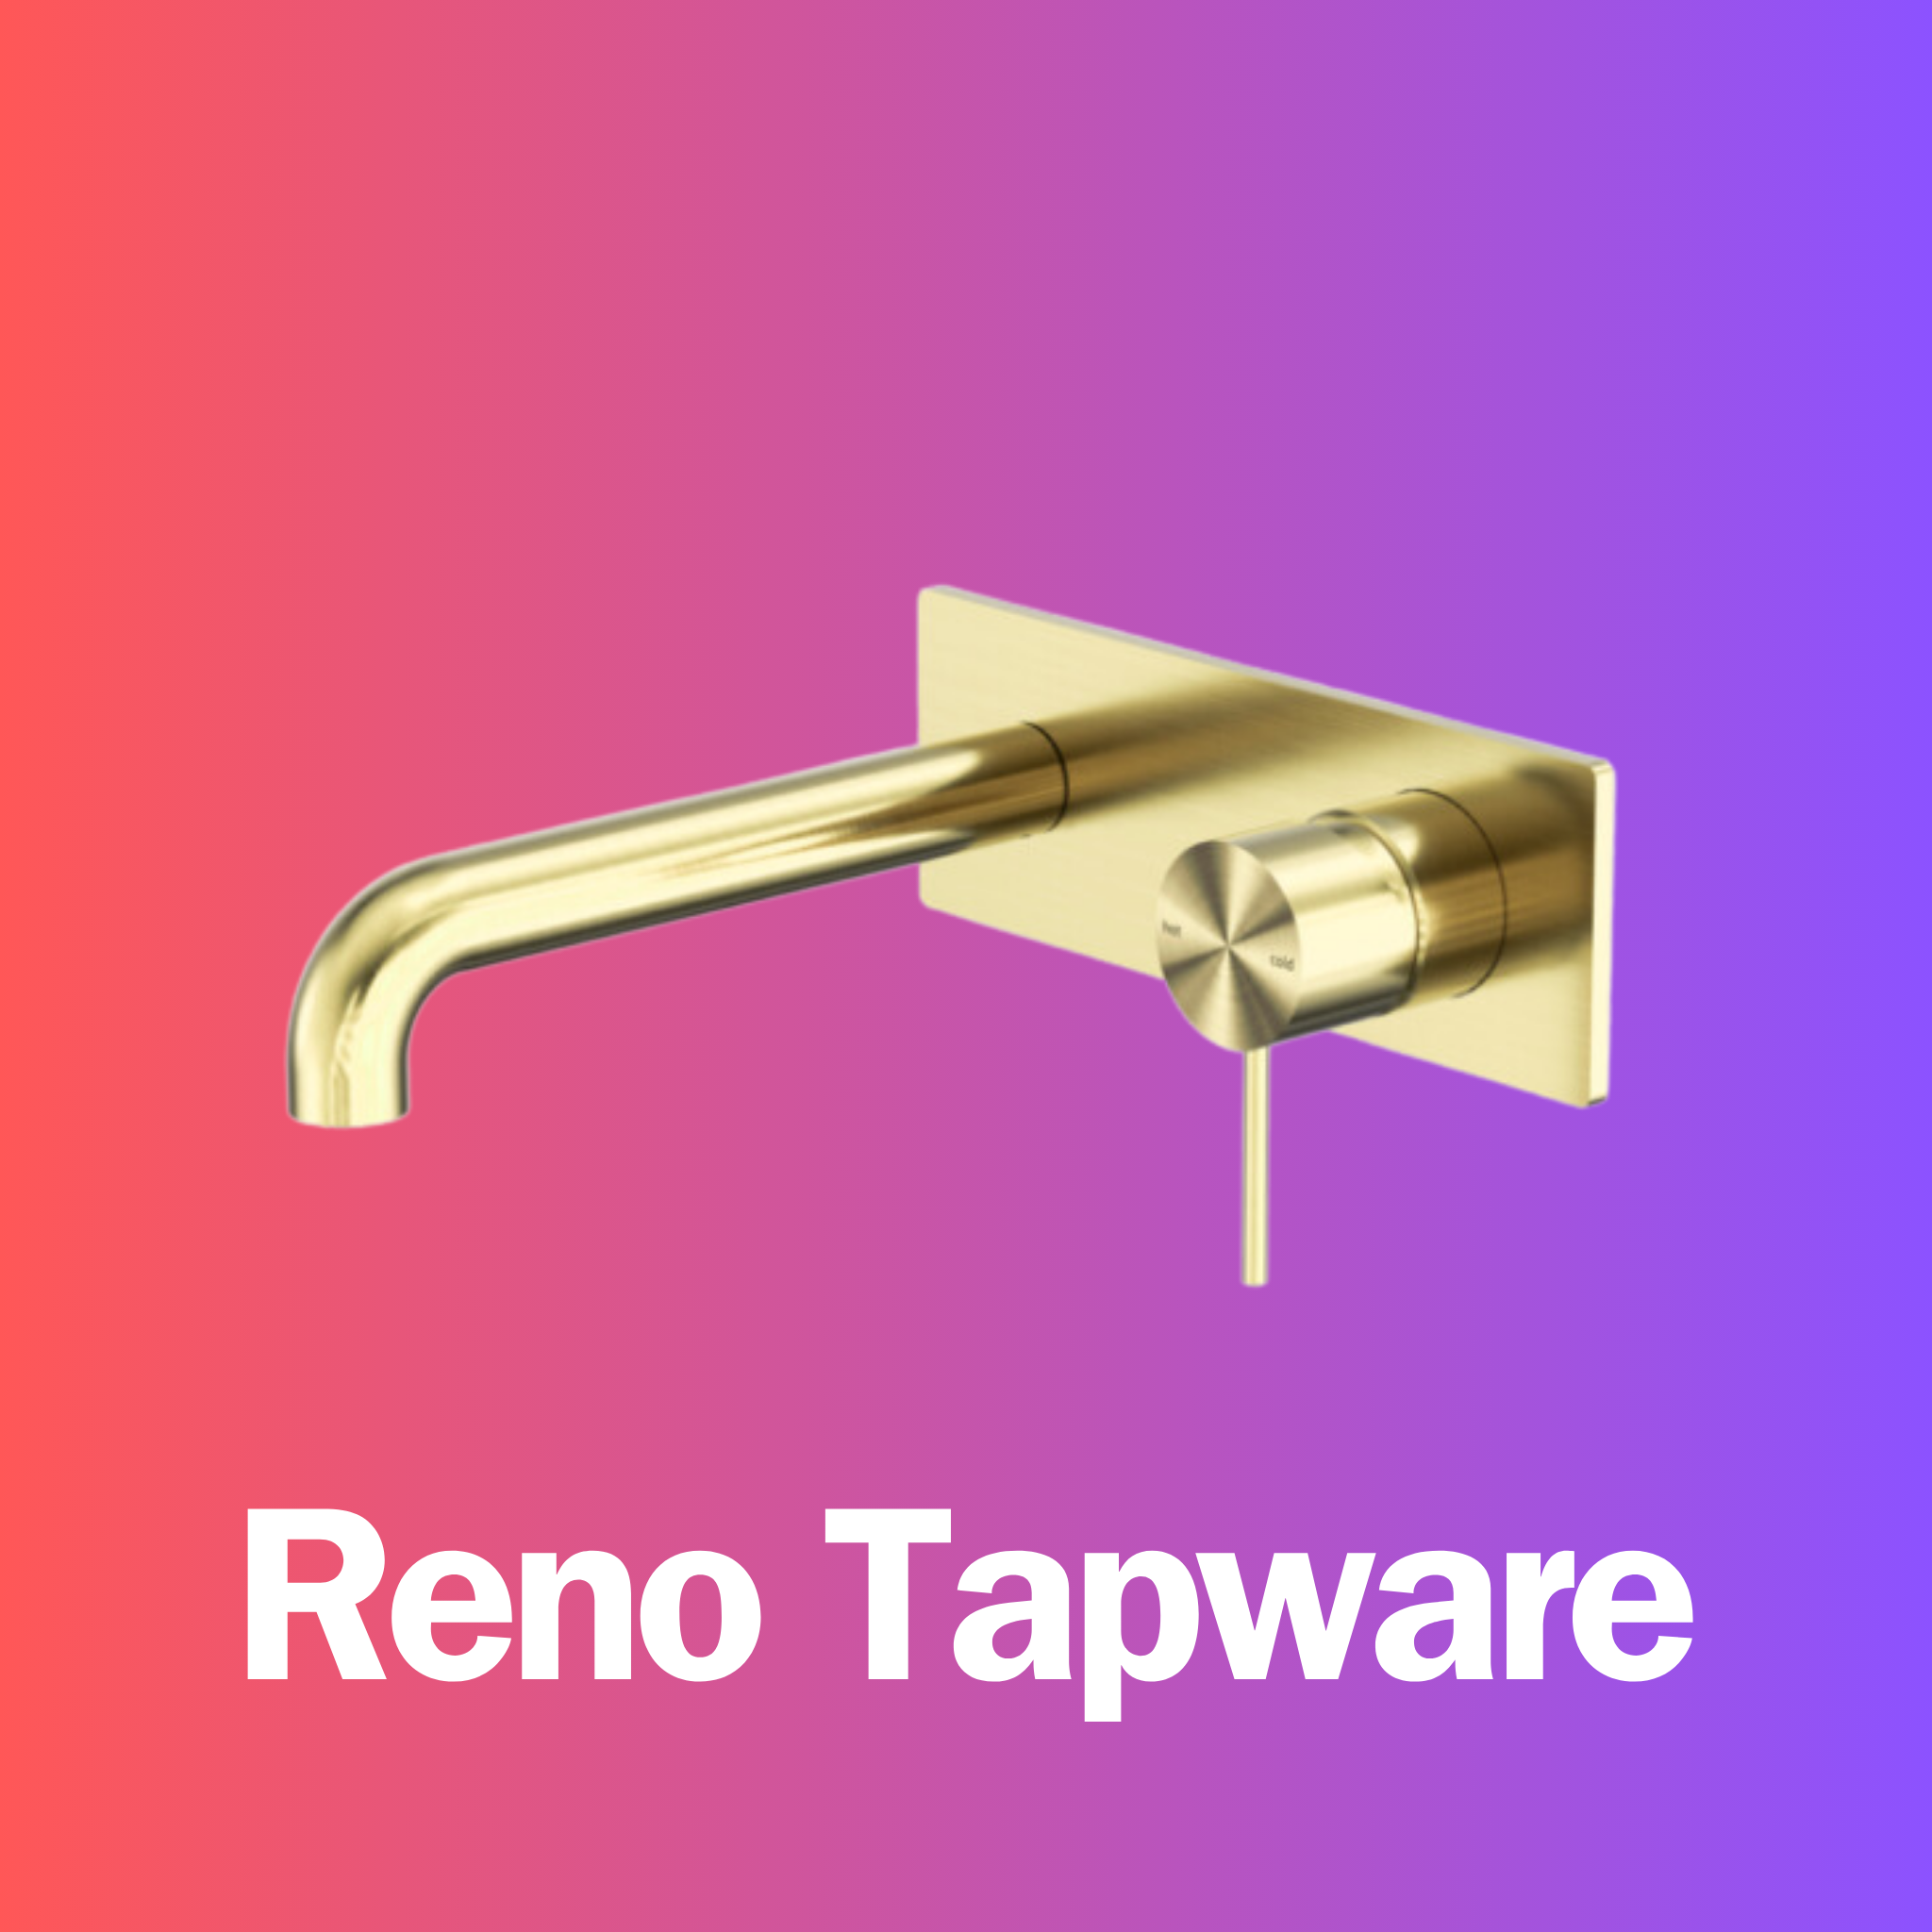 Reno Tapware